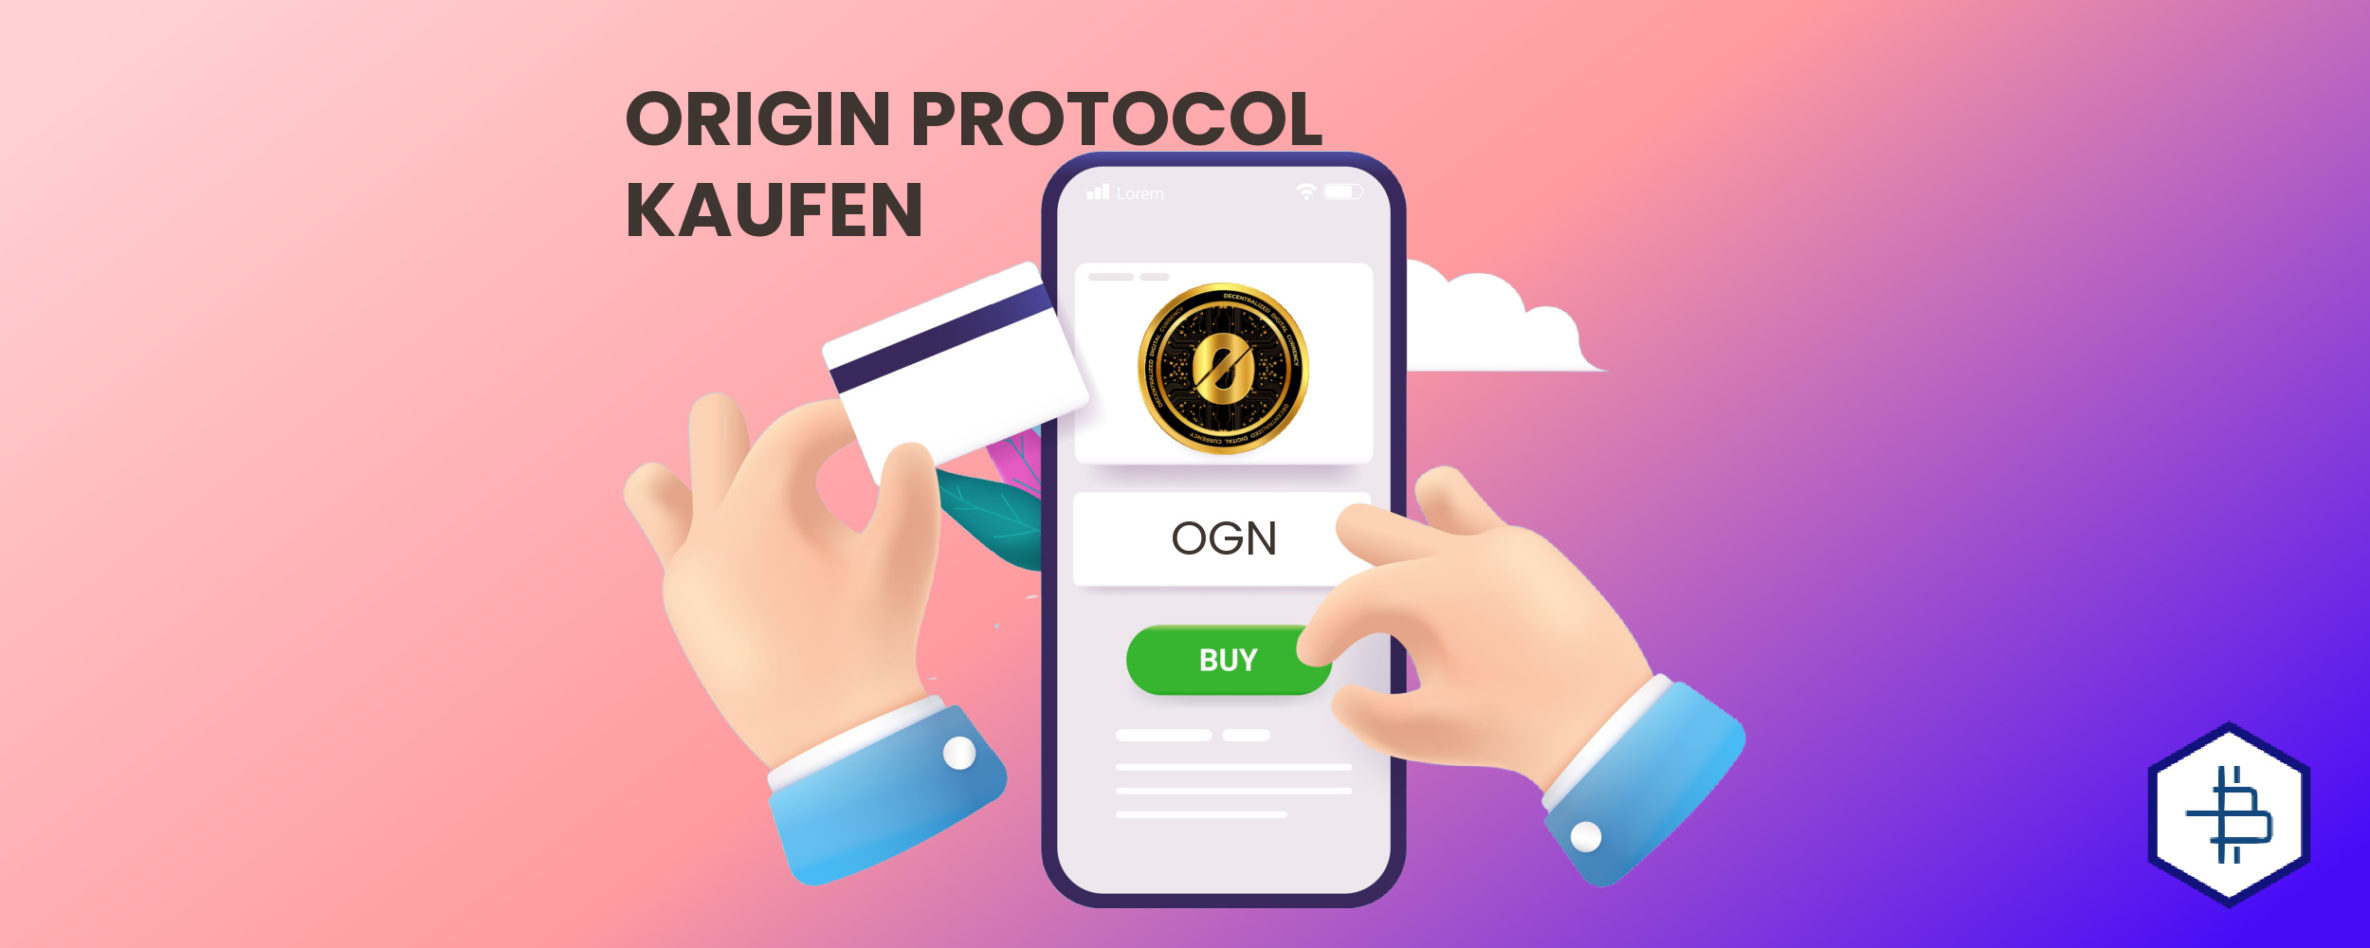 Origin Protocol kaufen